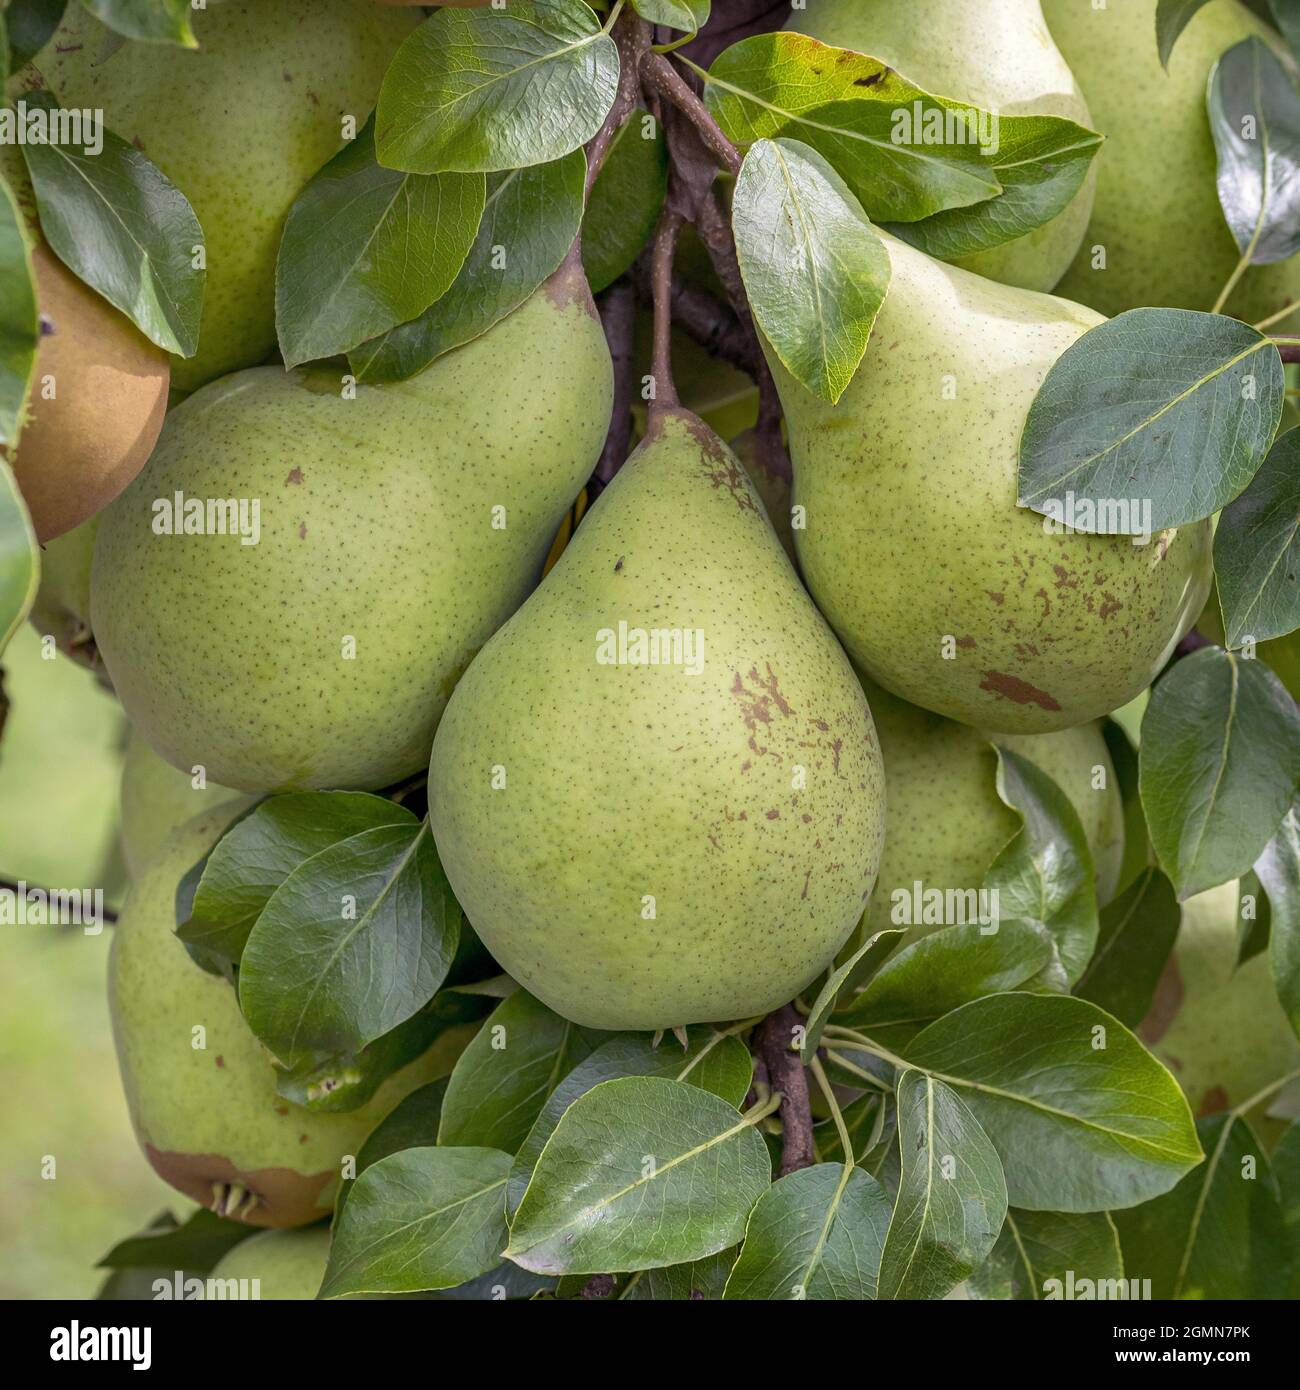 Pera común (Pyrus communis 'Six' Butterbirne', Pyrus communis Six' Butterbirne), pera en un árbol, cultivar Six' Butterbirne Foto de stock